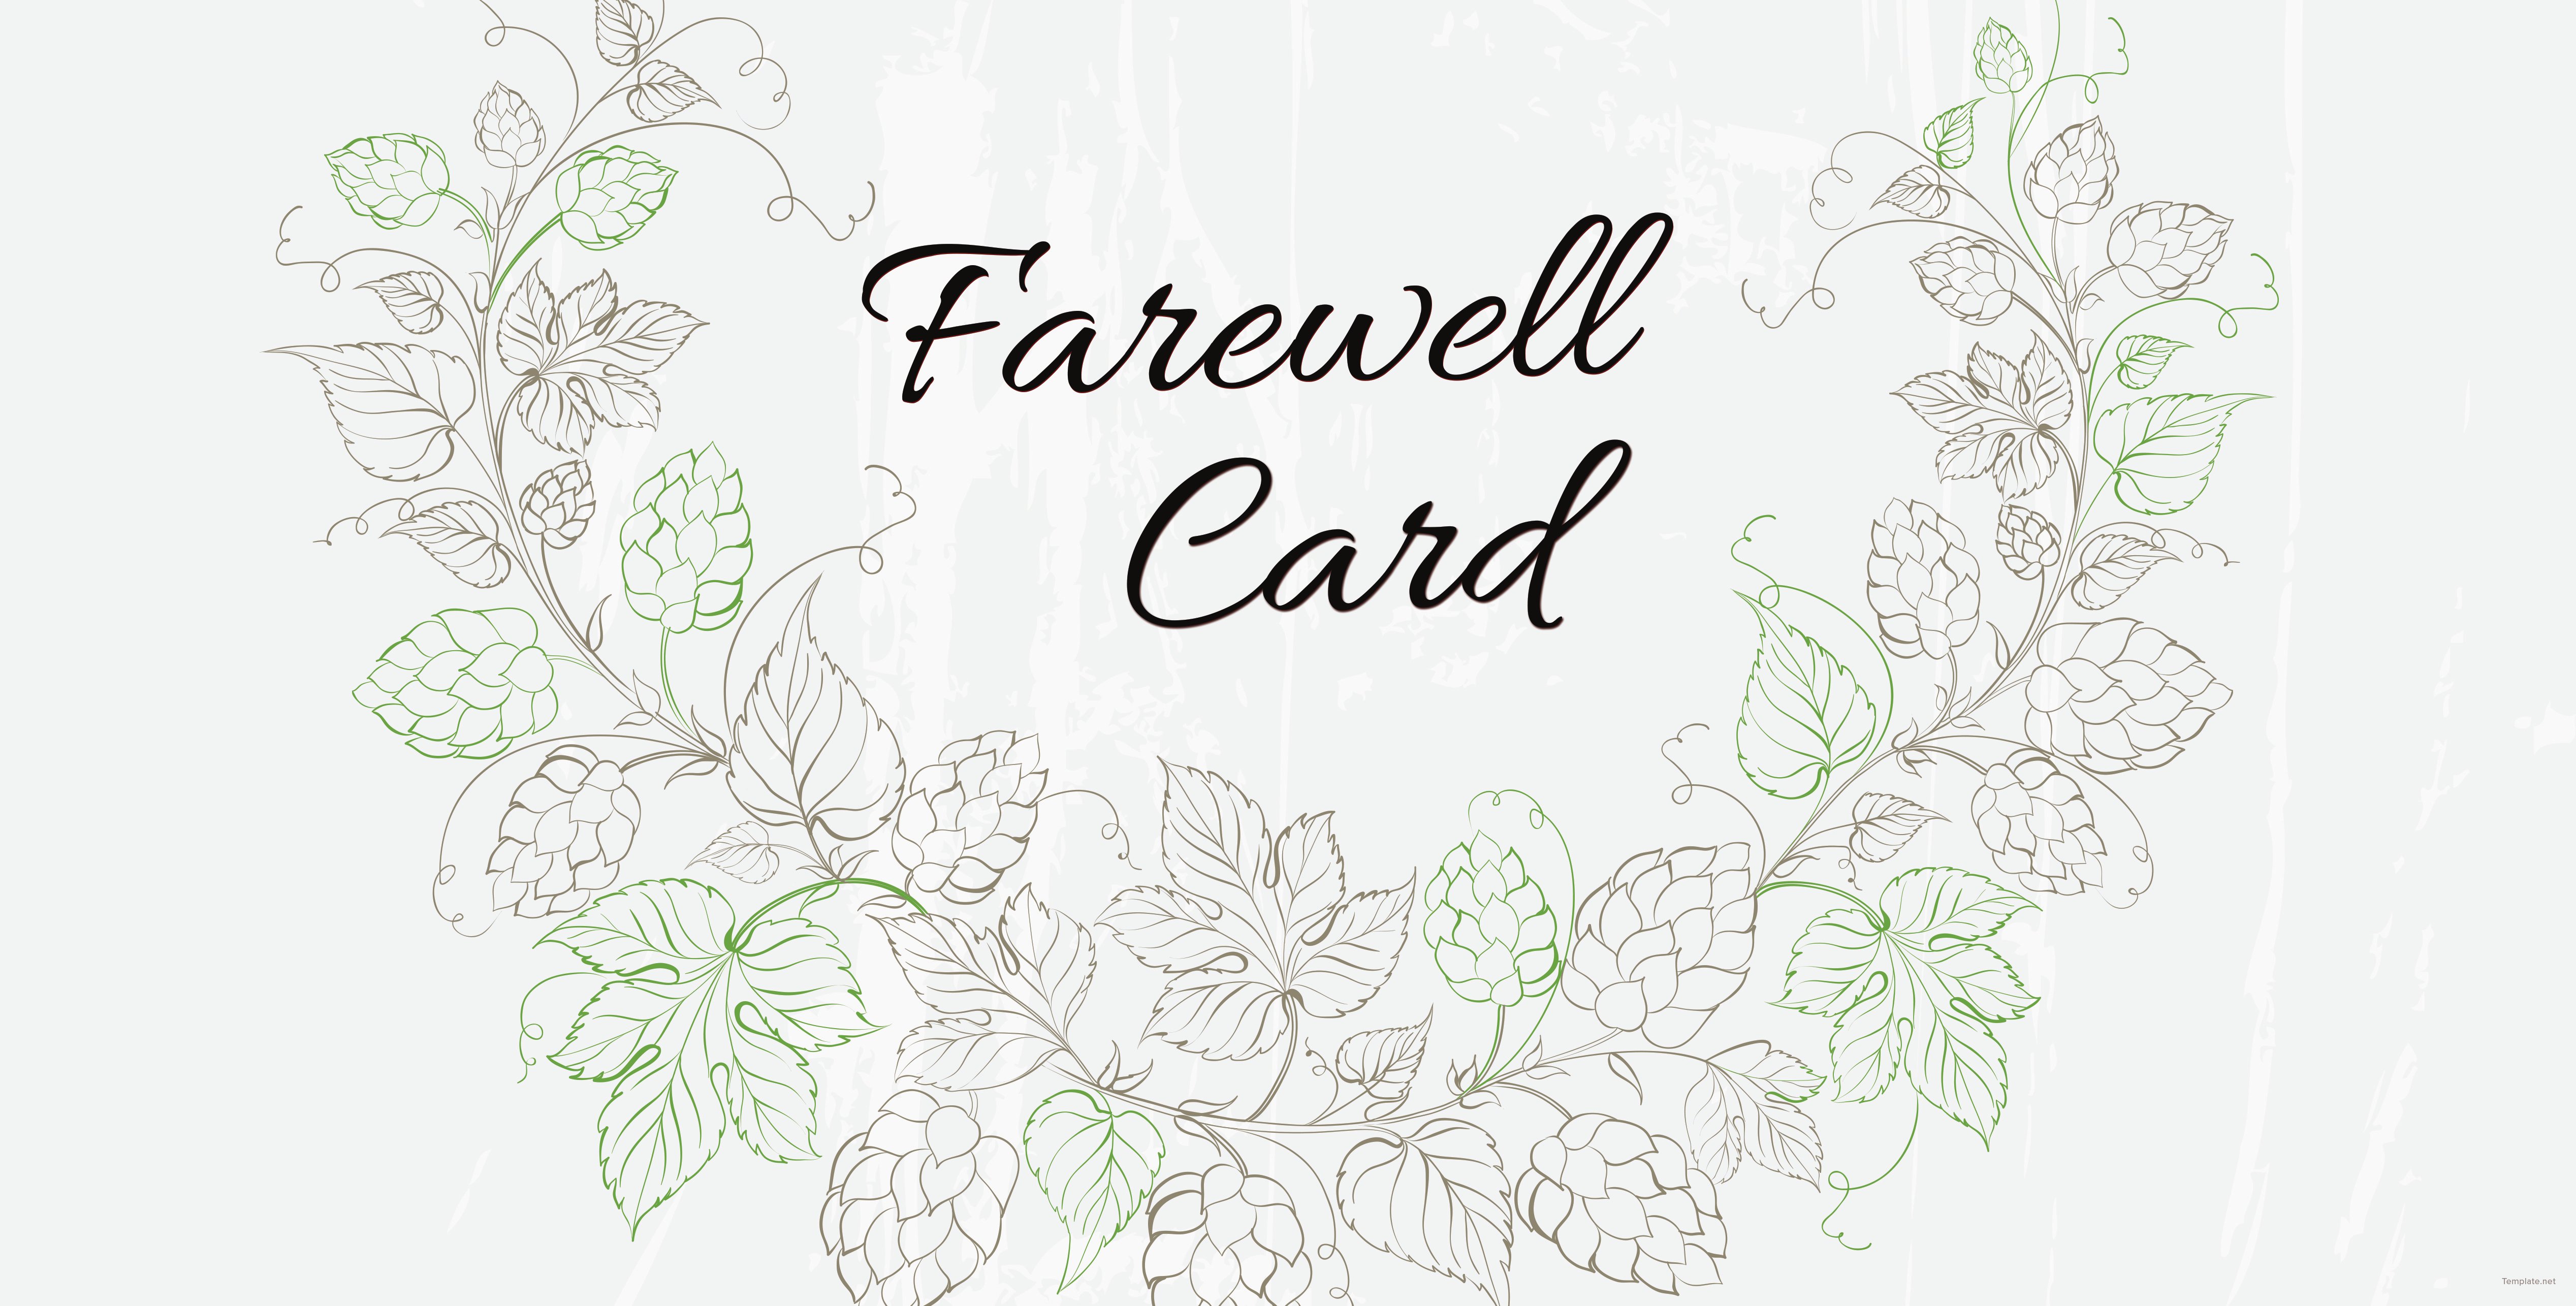 farewell-card-template-free-download-nisma-info